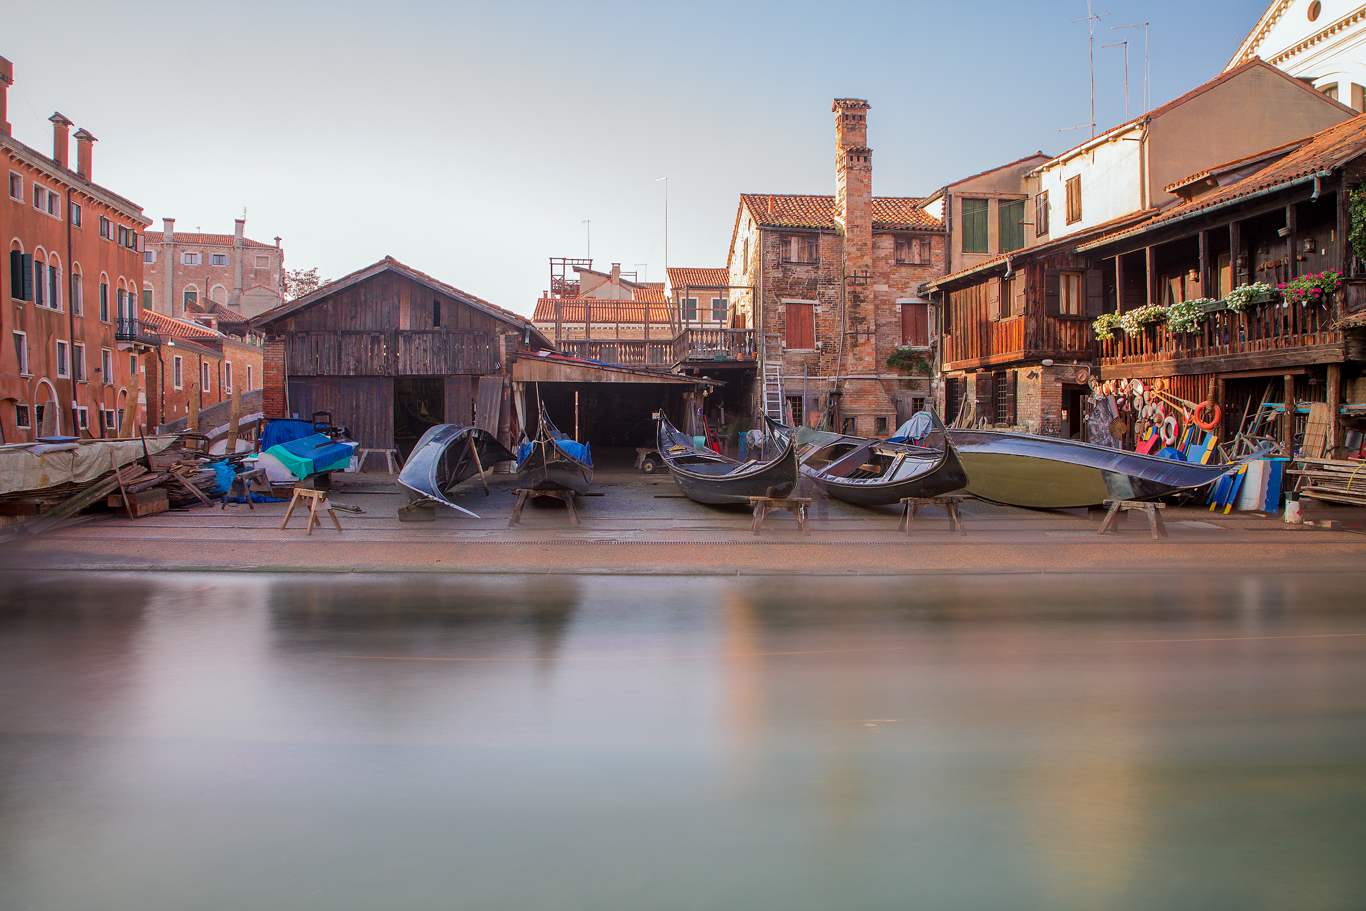 The shipyard in Venice!...